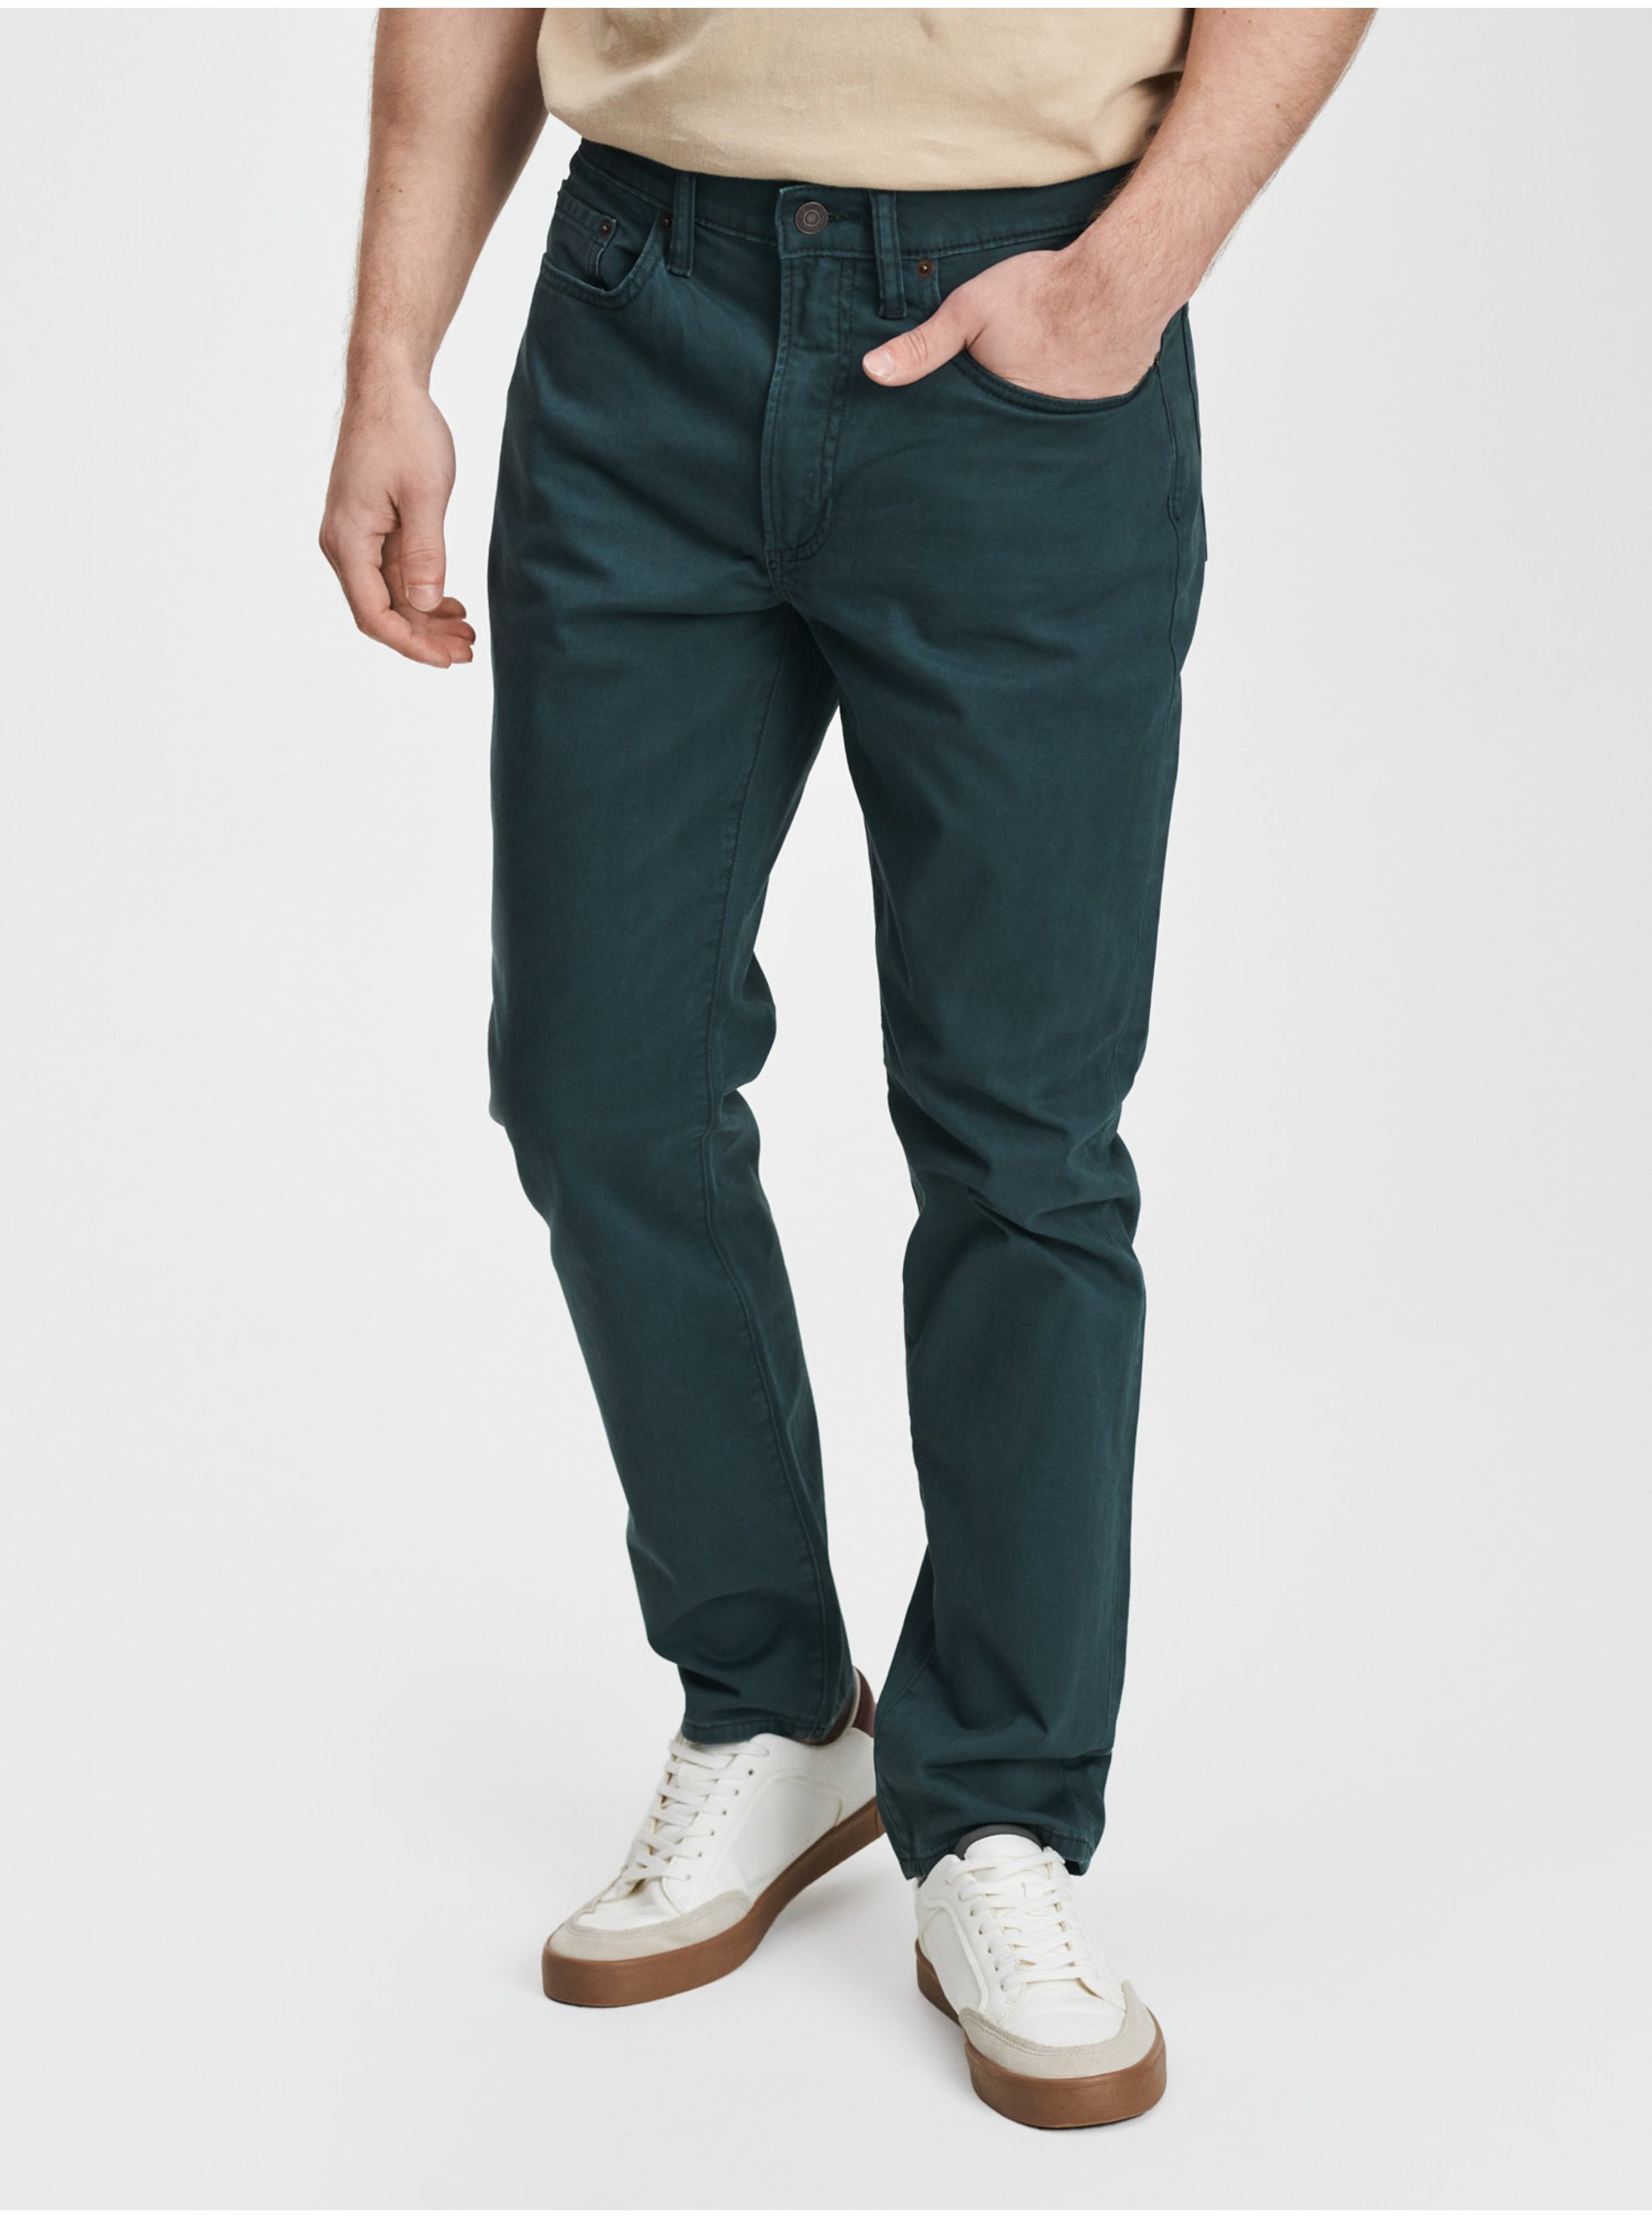 Lacno Zelené pánské kalhoty soft wear slim with GapFlex GAP